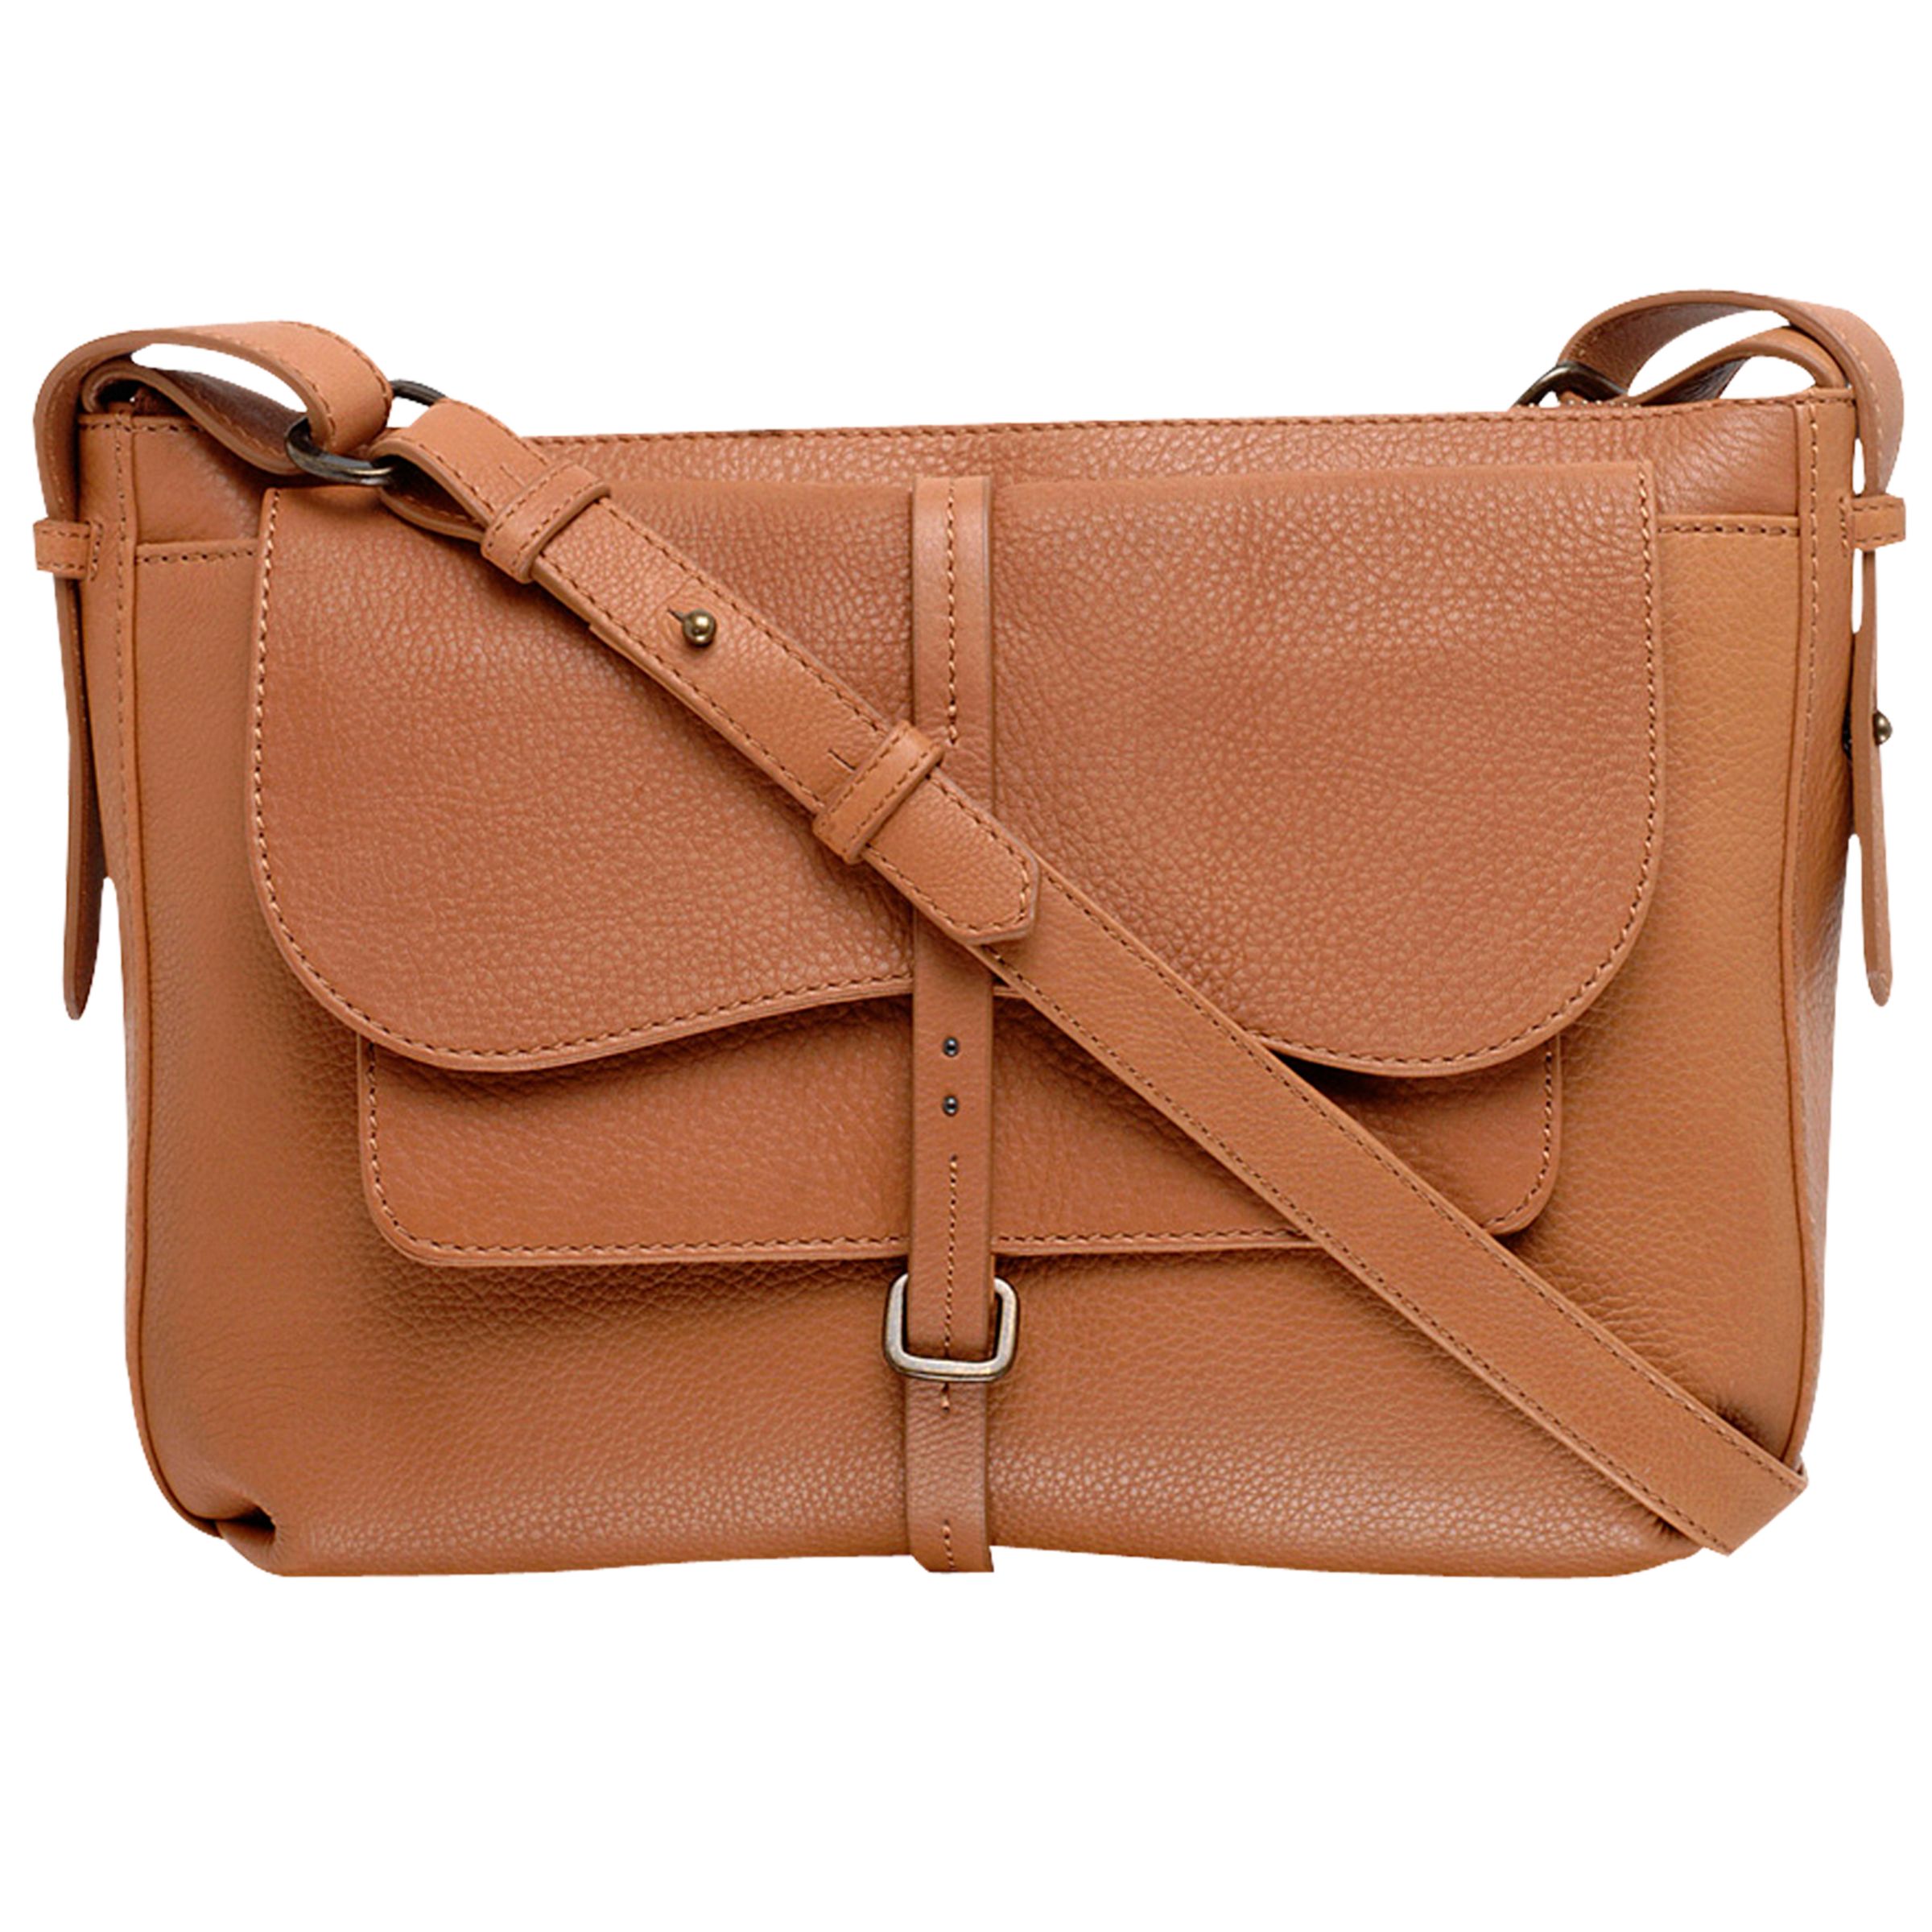 Radley Grosvenor Medium Leather Across Body Bag